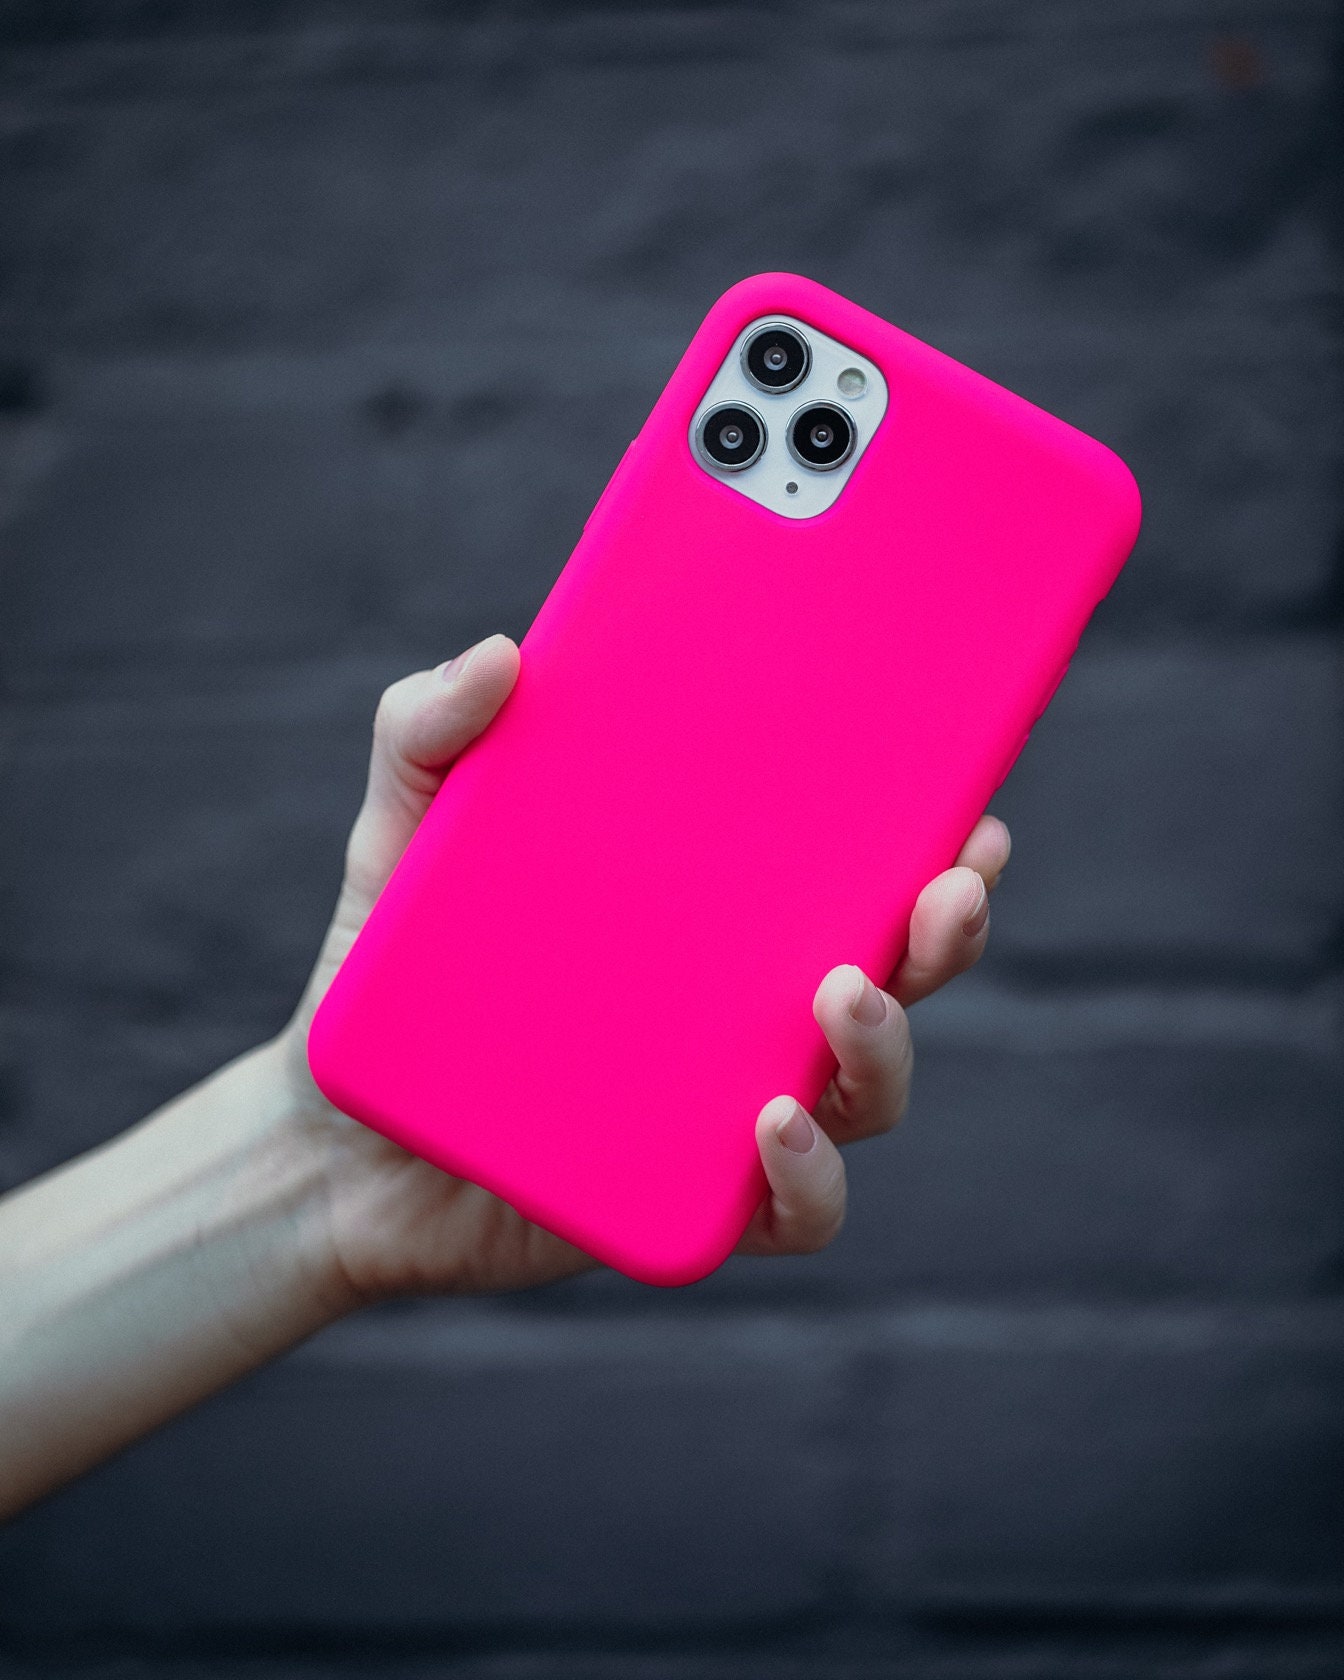 Capa silicone case iphone 11 pro max rosa bebe - Apple - Espaço